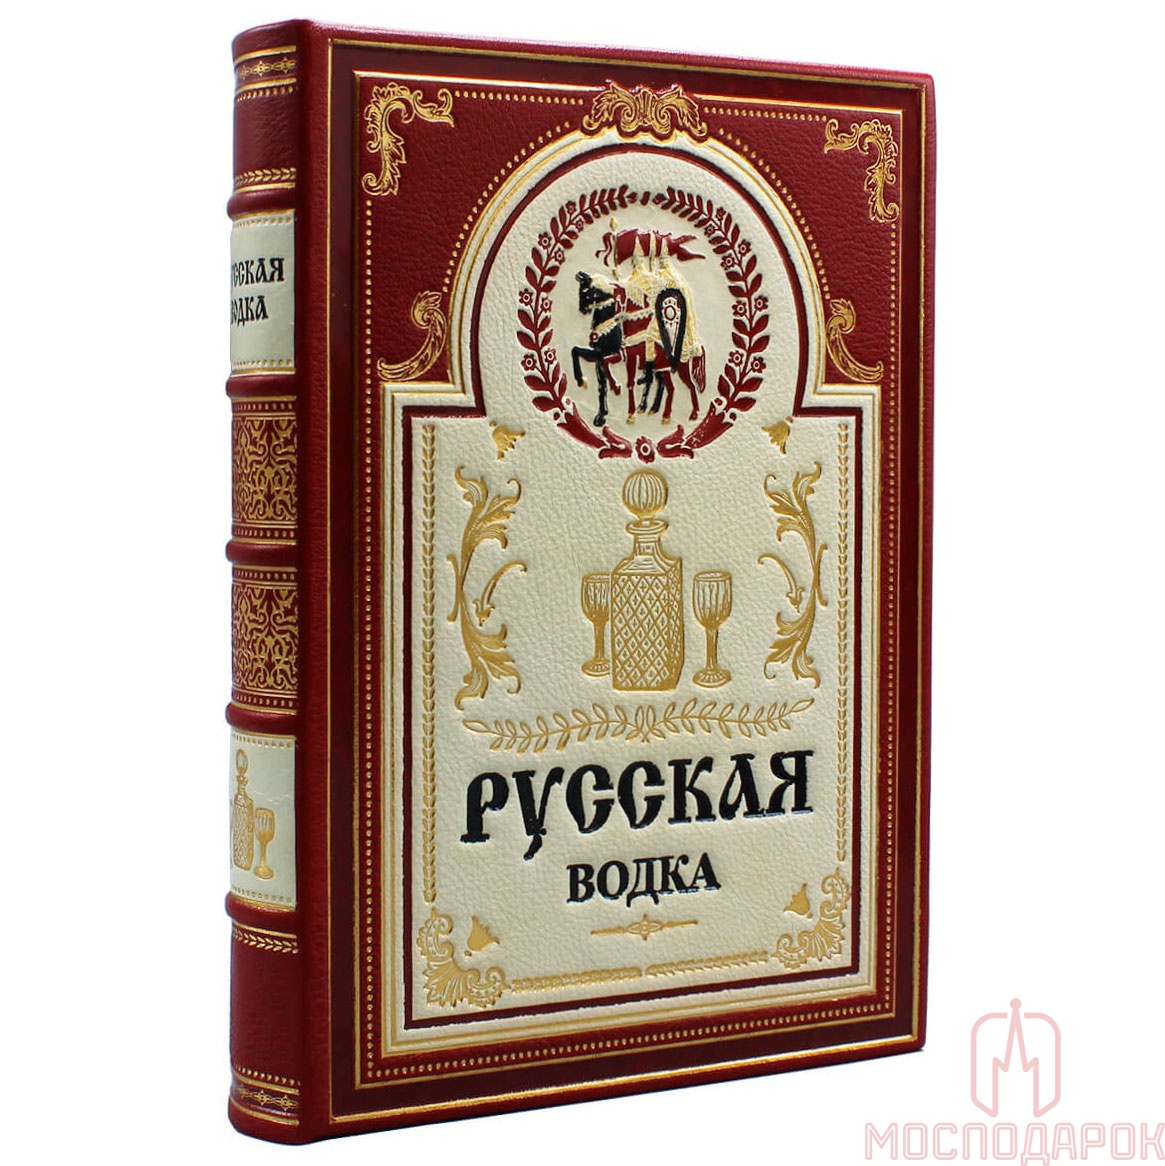 Подарочная книга "Русская водка" - артикул: S4455 | Мосподарок 